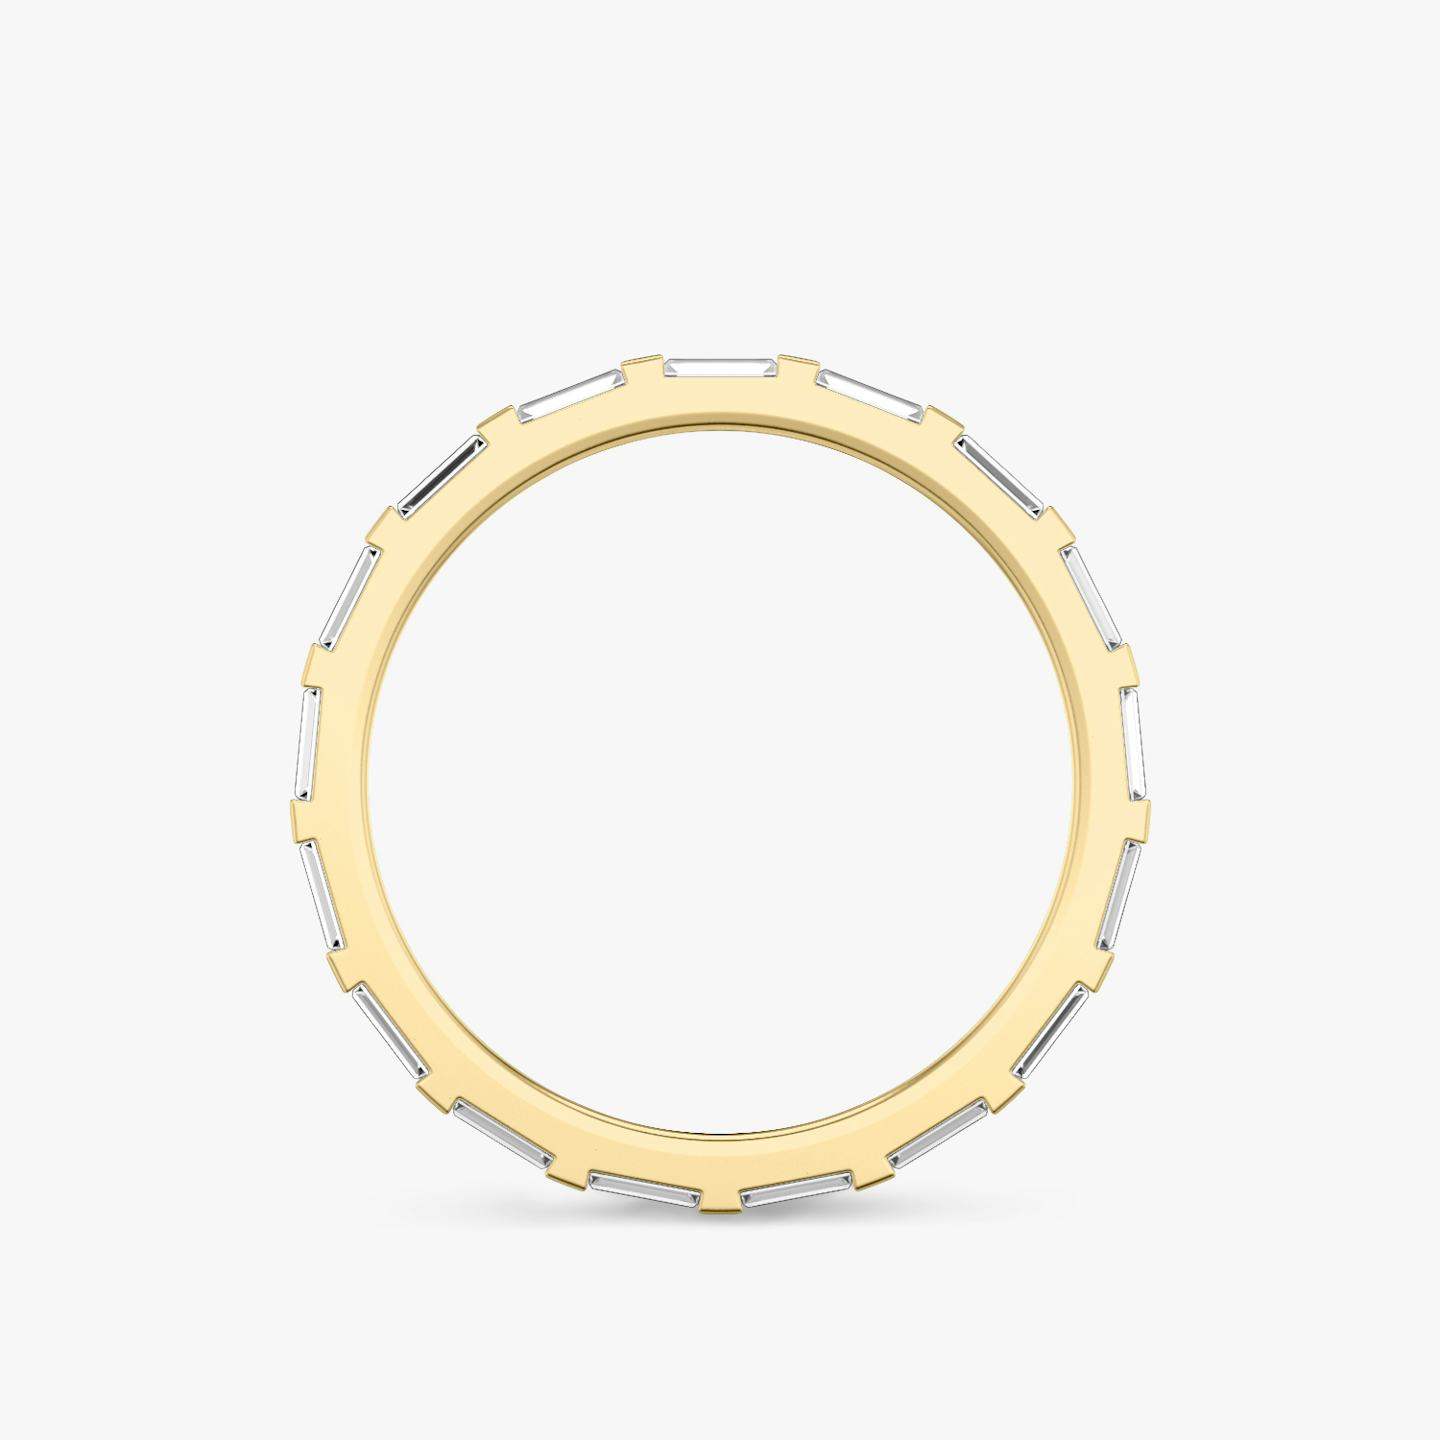 El Anillo Baguette Bar | Baguette | 18k | Oro amarillo de 18 quilates | Estilo del anillo: Diamantes alrededor